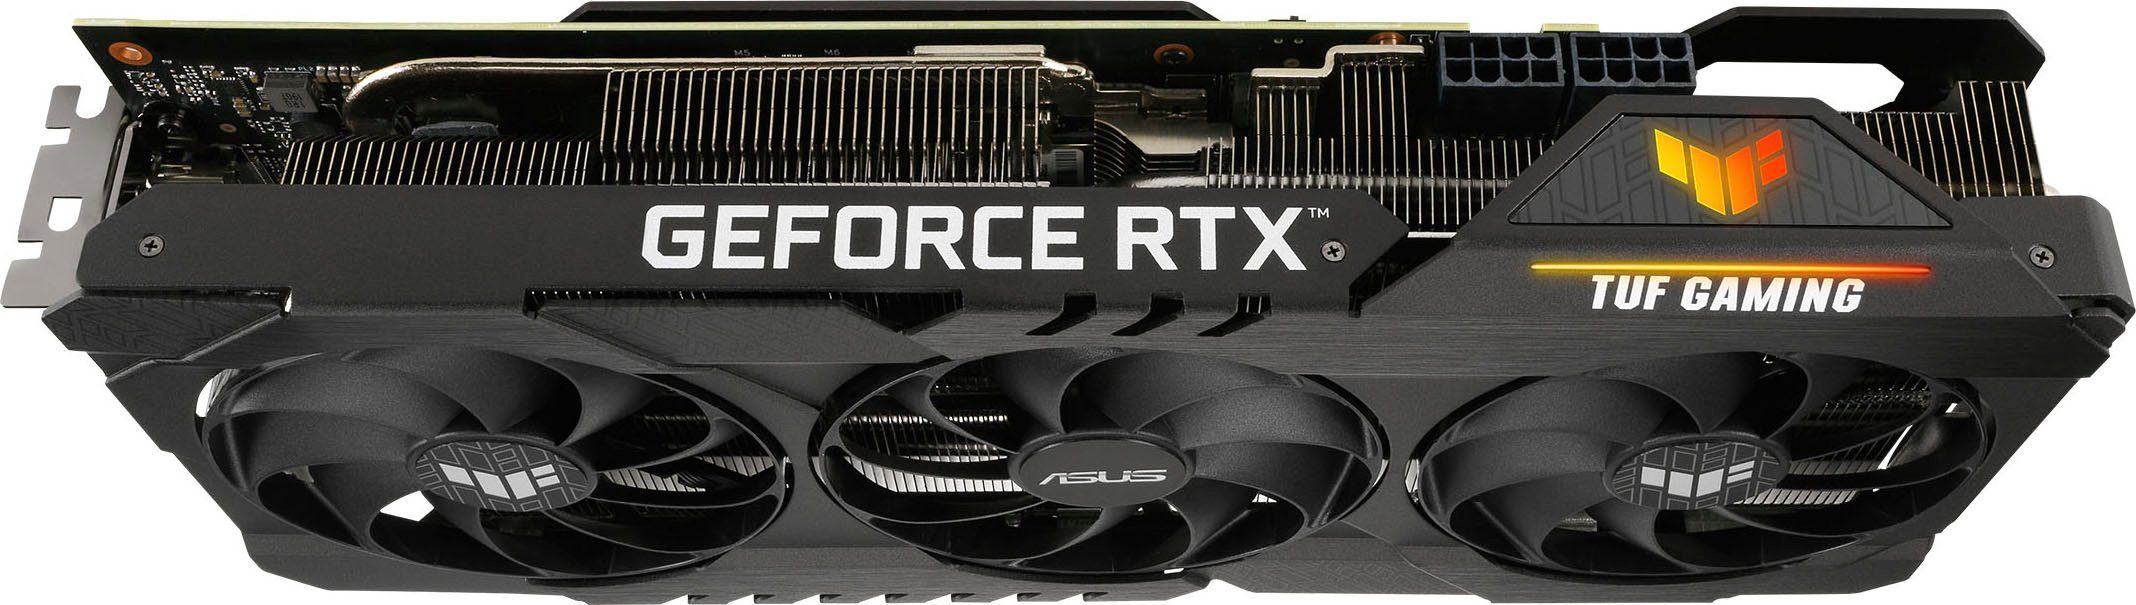 GDDR6X) Ti 3070 Asus RTX™ Gaming (8 TUF Grafikkarte GB, GeForce